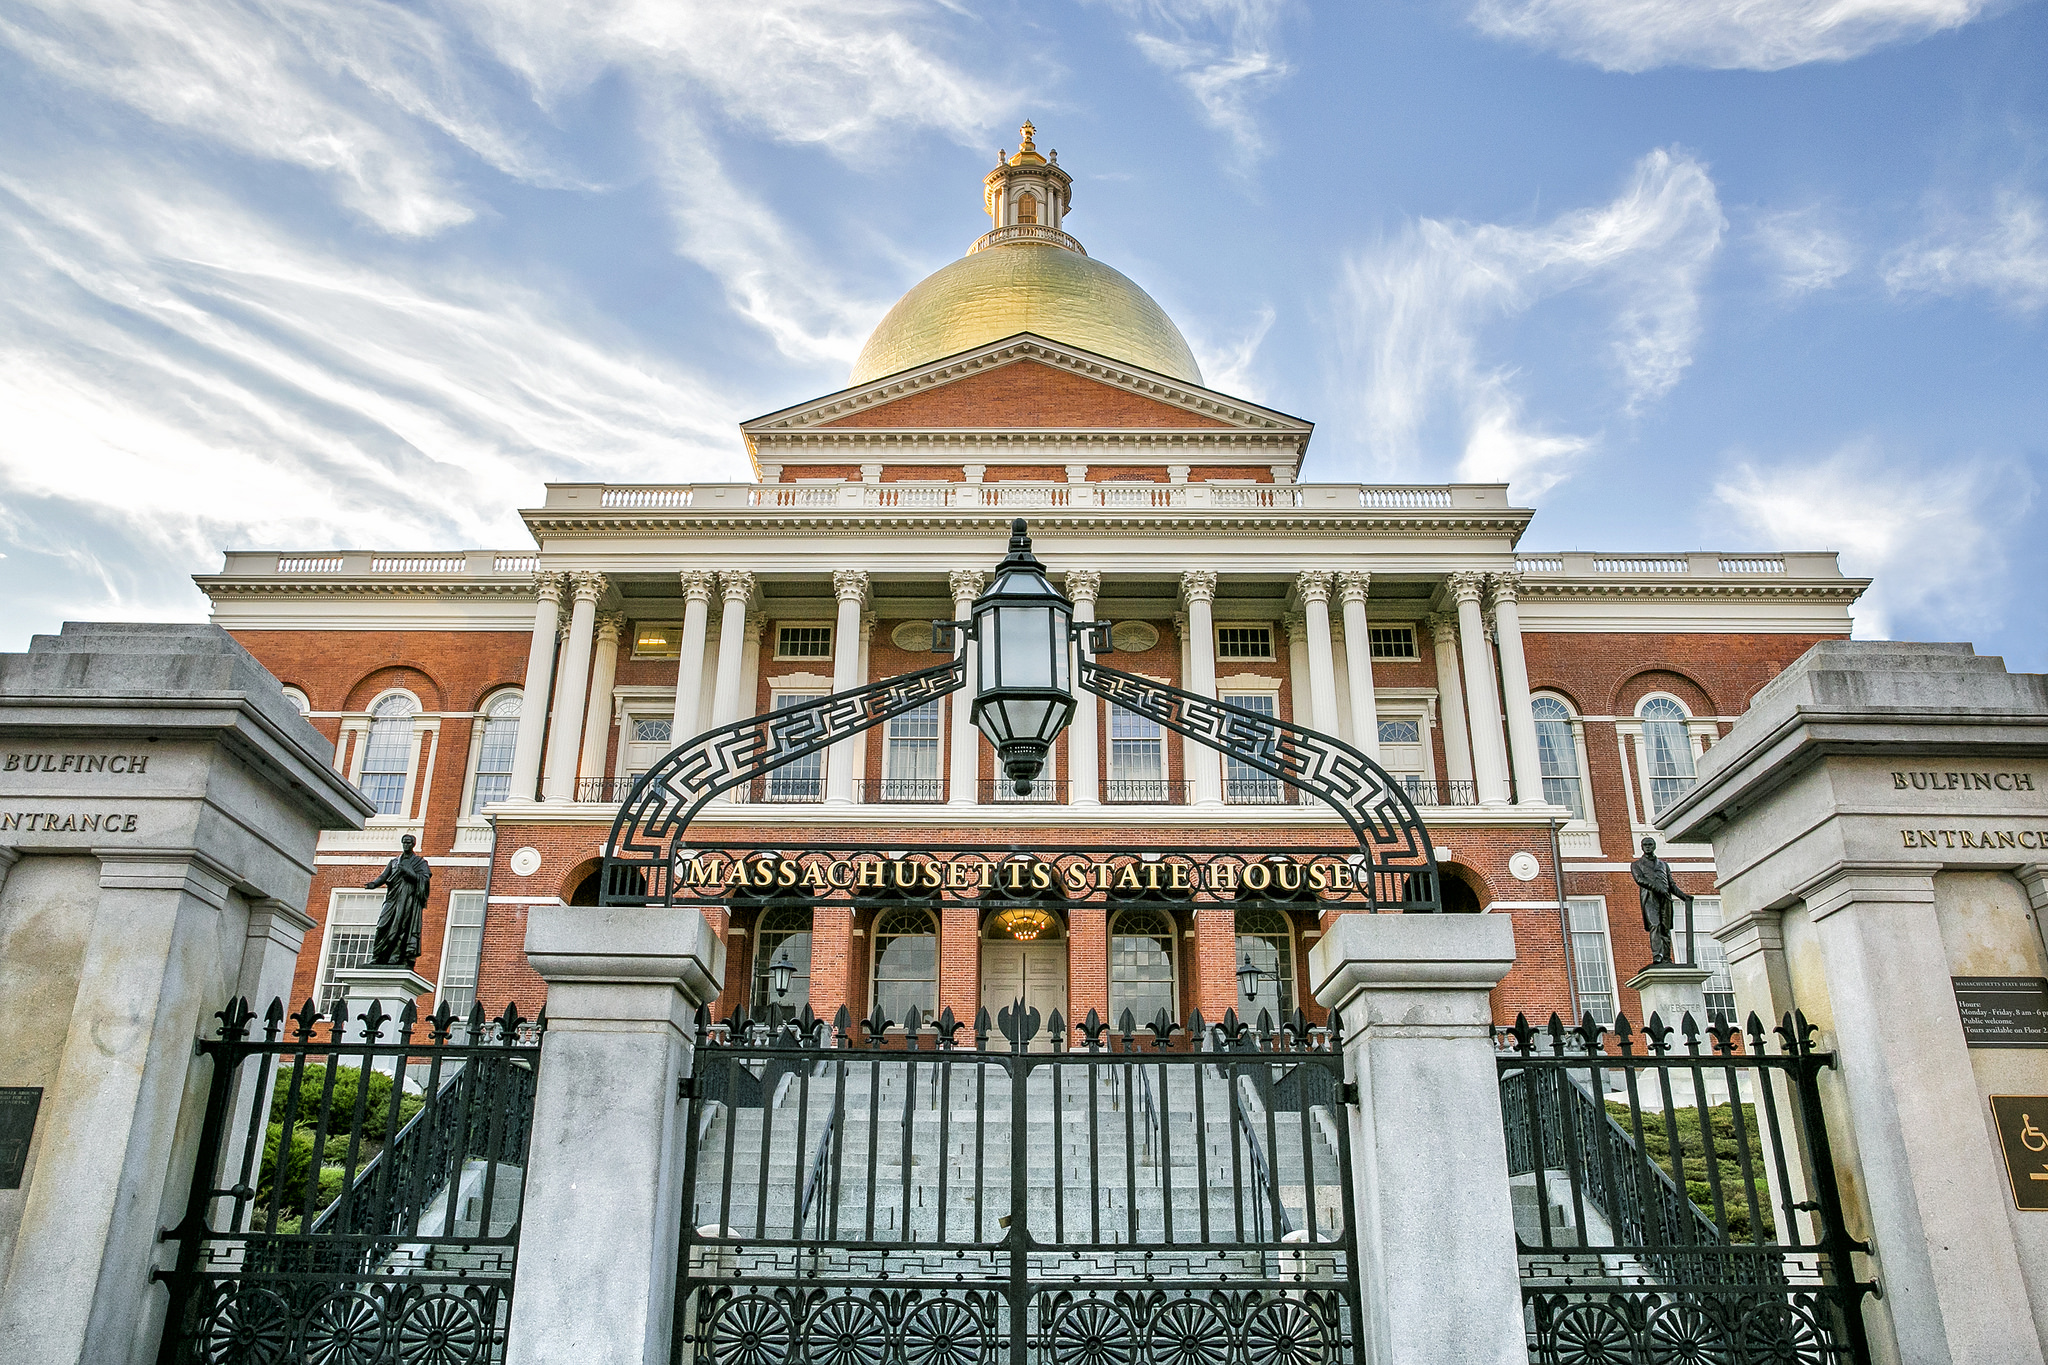 The Capitol Building in Boston